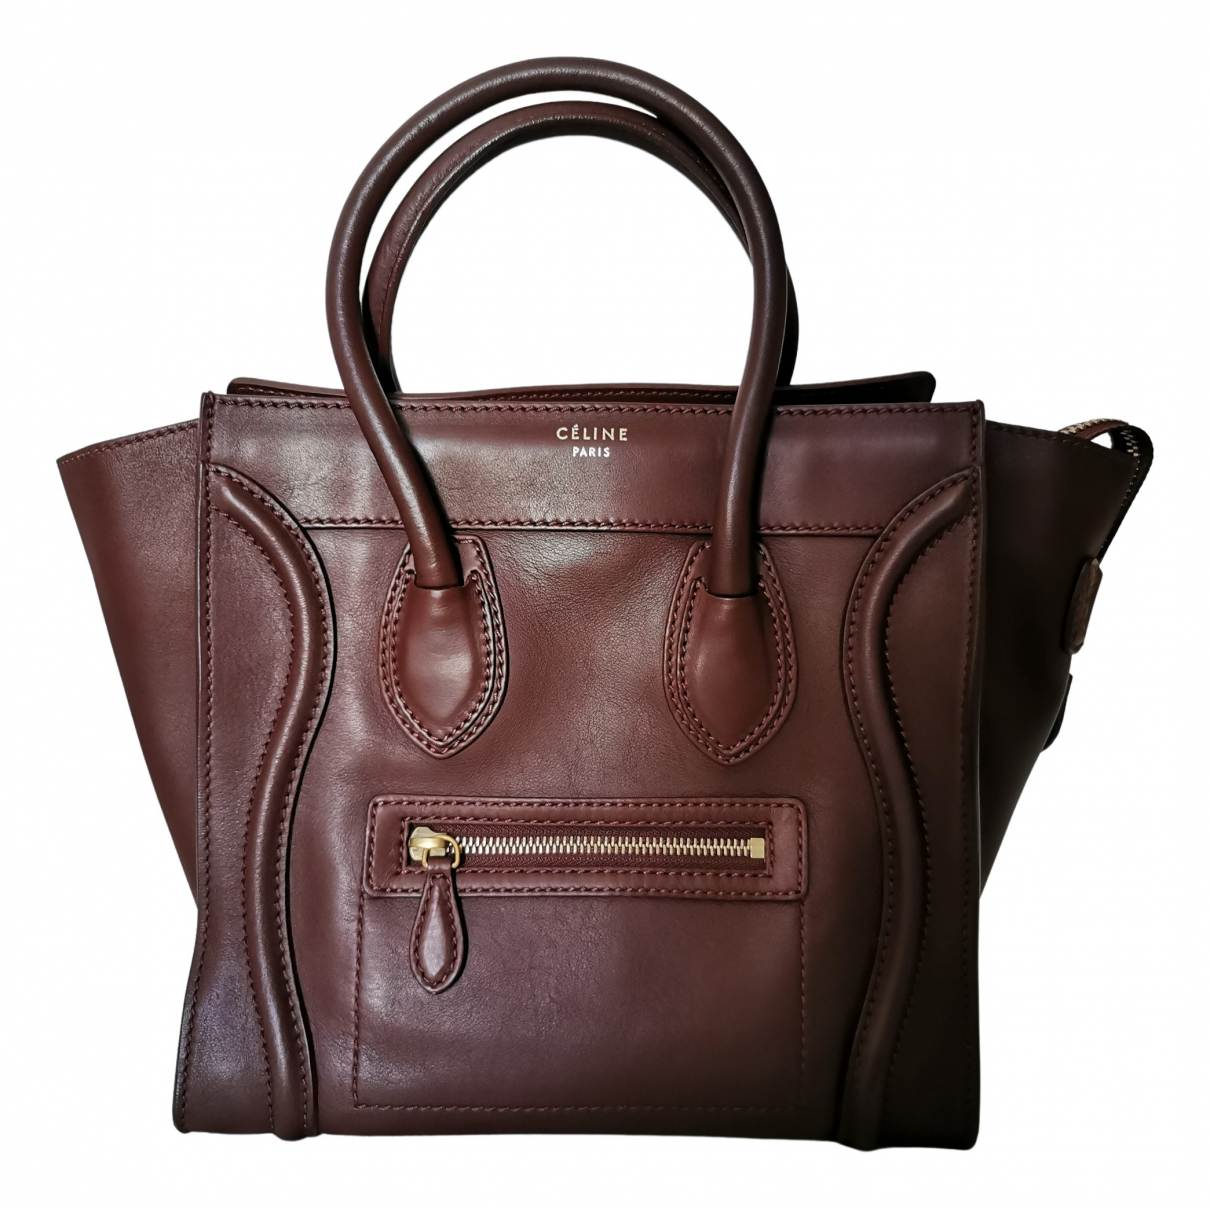 image of Celine Luggage leather handbag